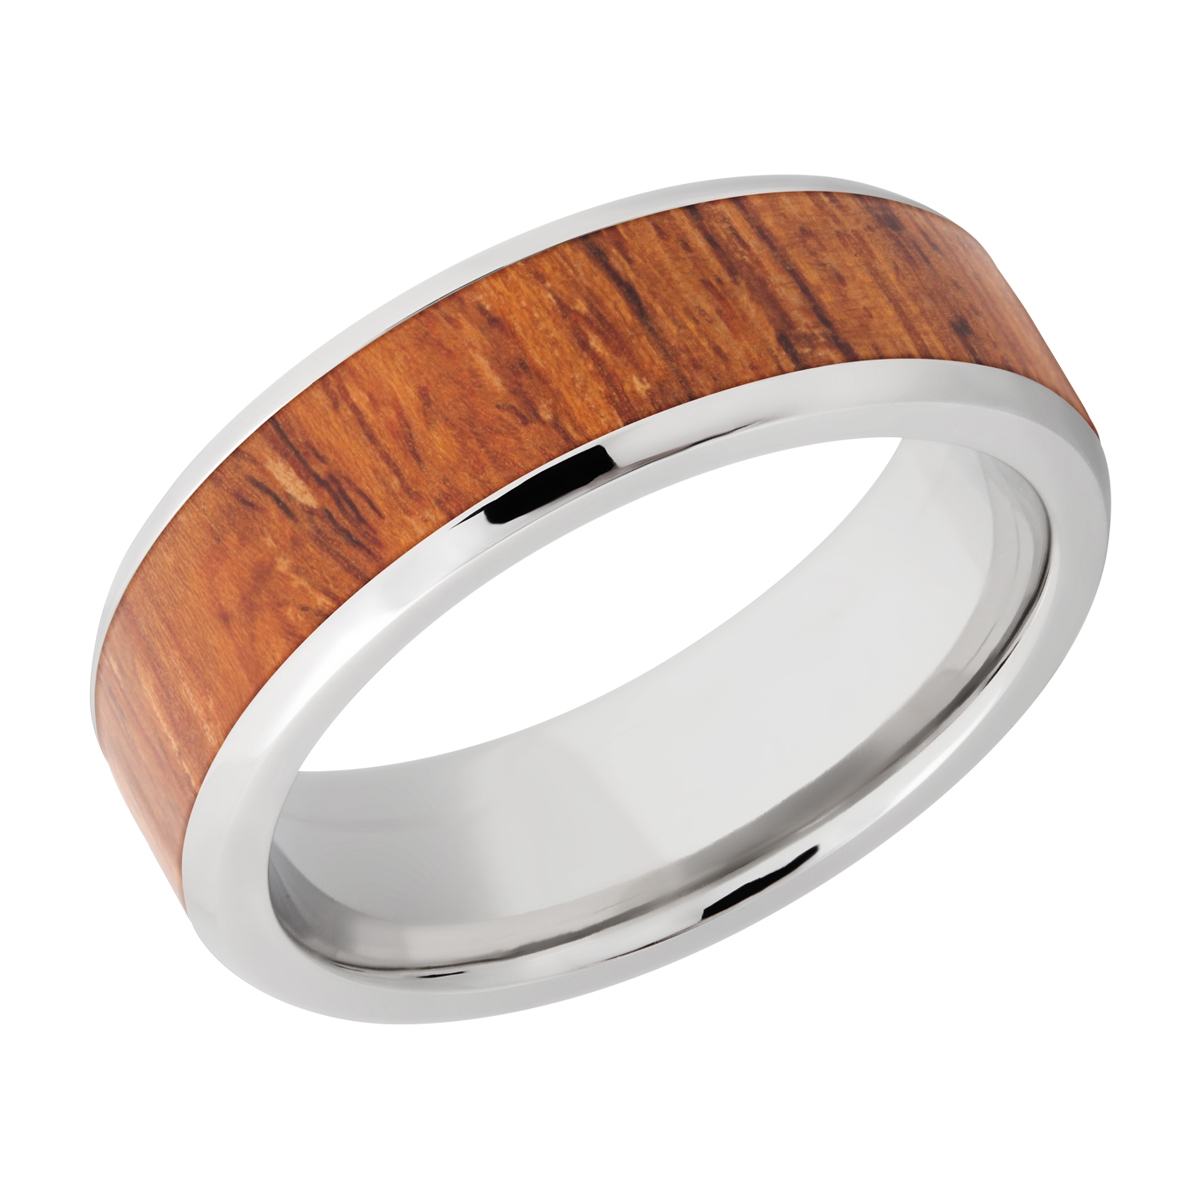 Lashbrook CC7B15(NS)/HARDWOOD Cobalt Chrome Wedding Ring or Band